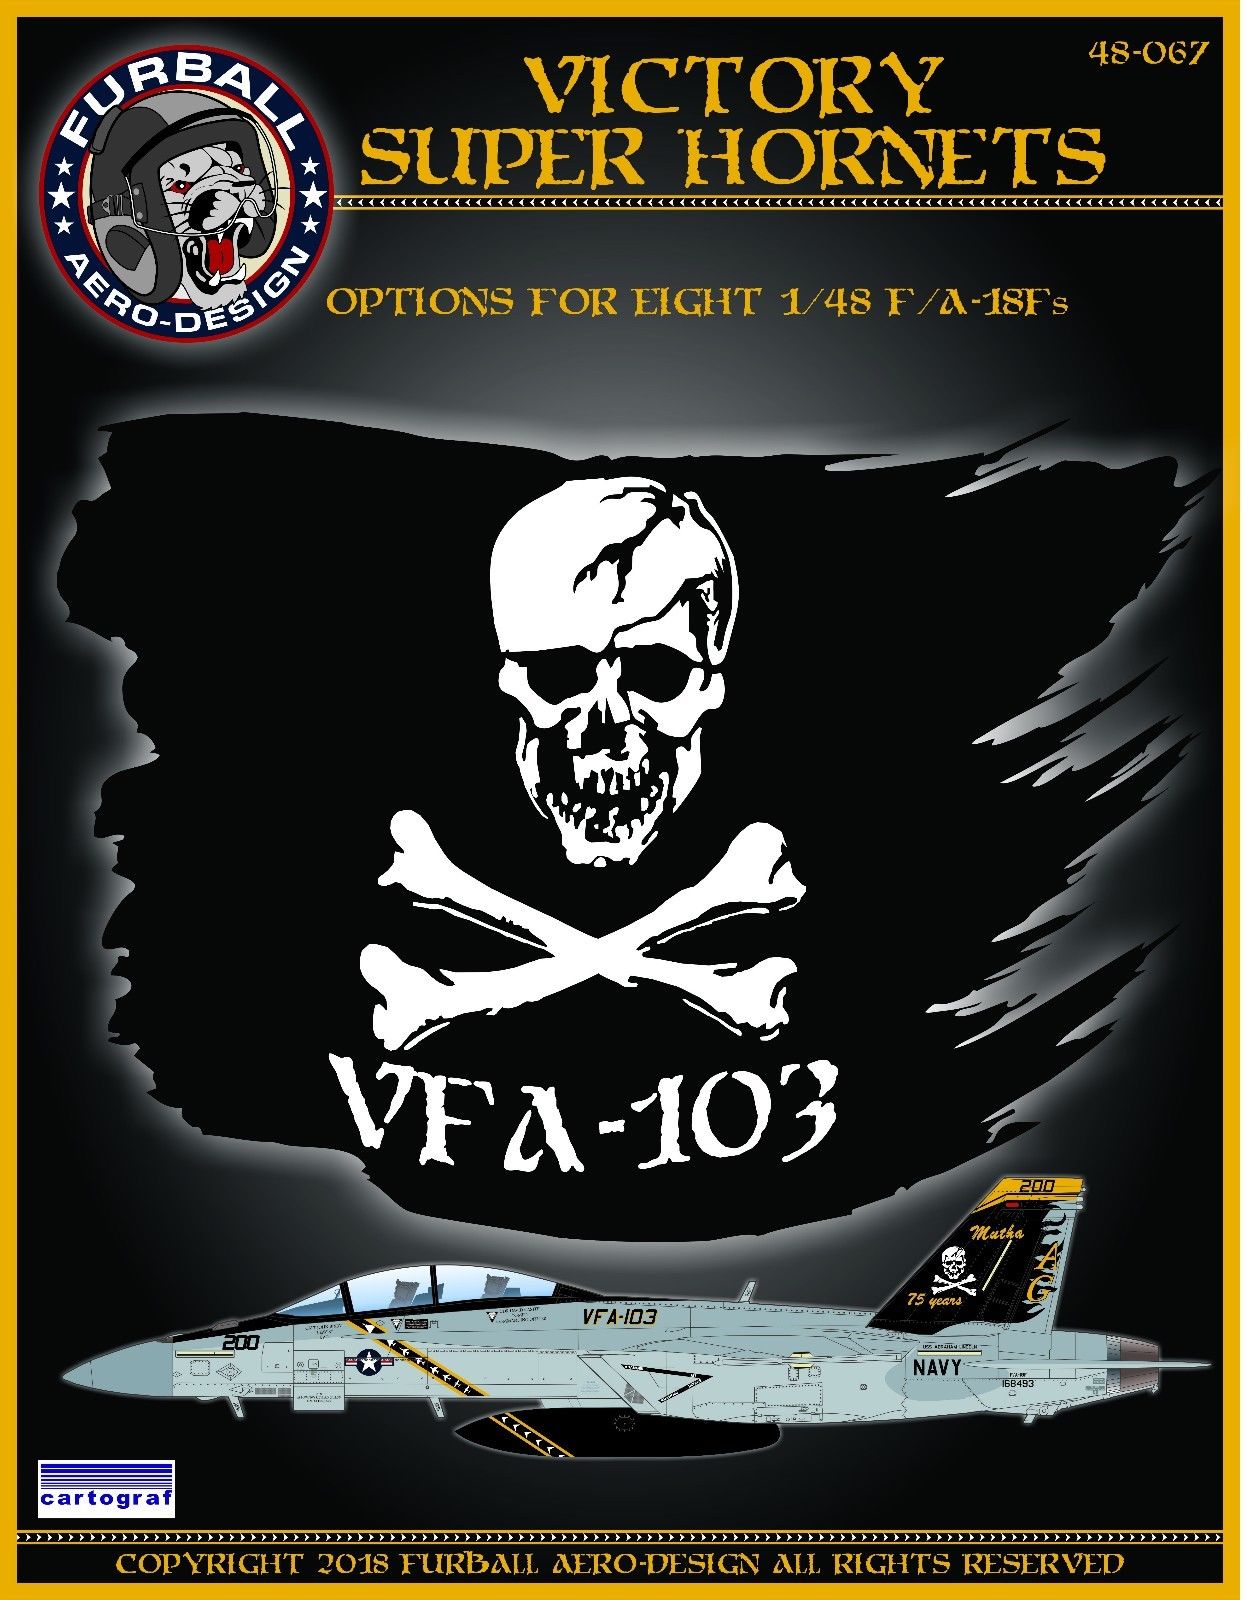 1/48 F/A-18F 超级大黄蜂战斗机"VFA-103骷髅中队胜利者" - 点击图像关闭